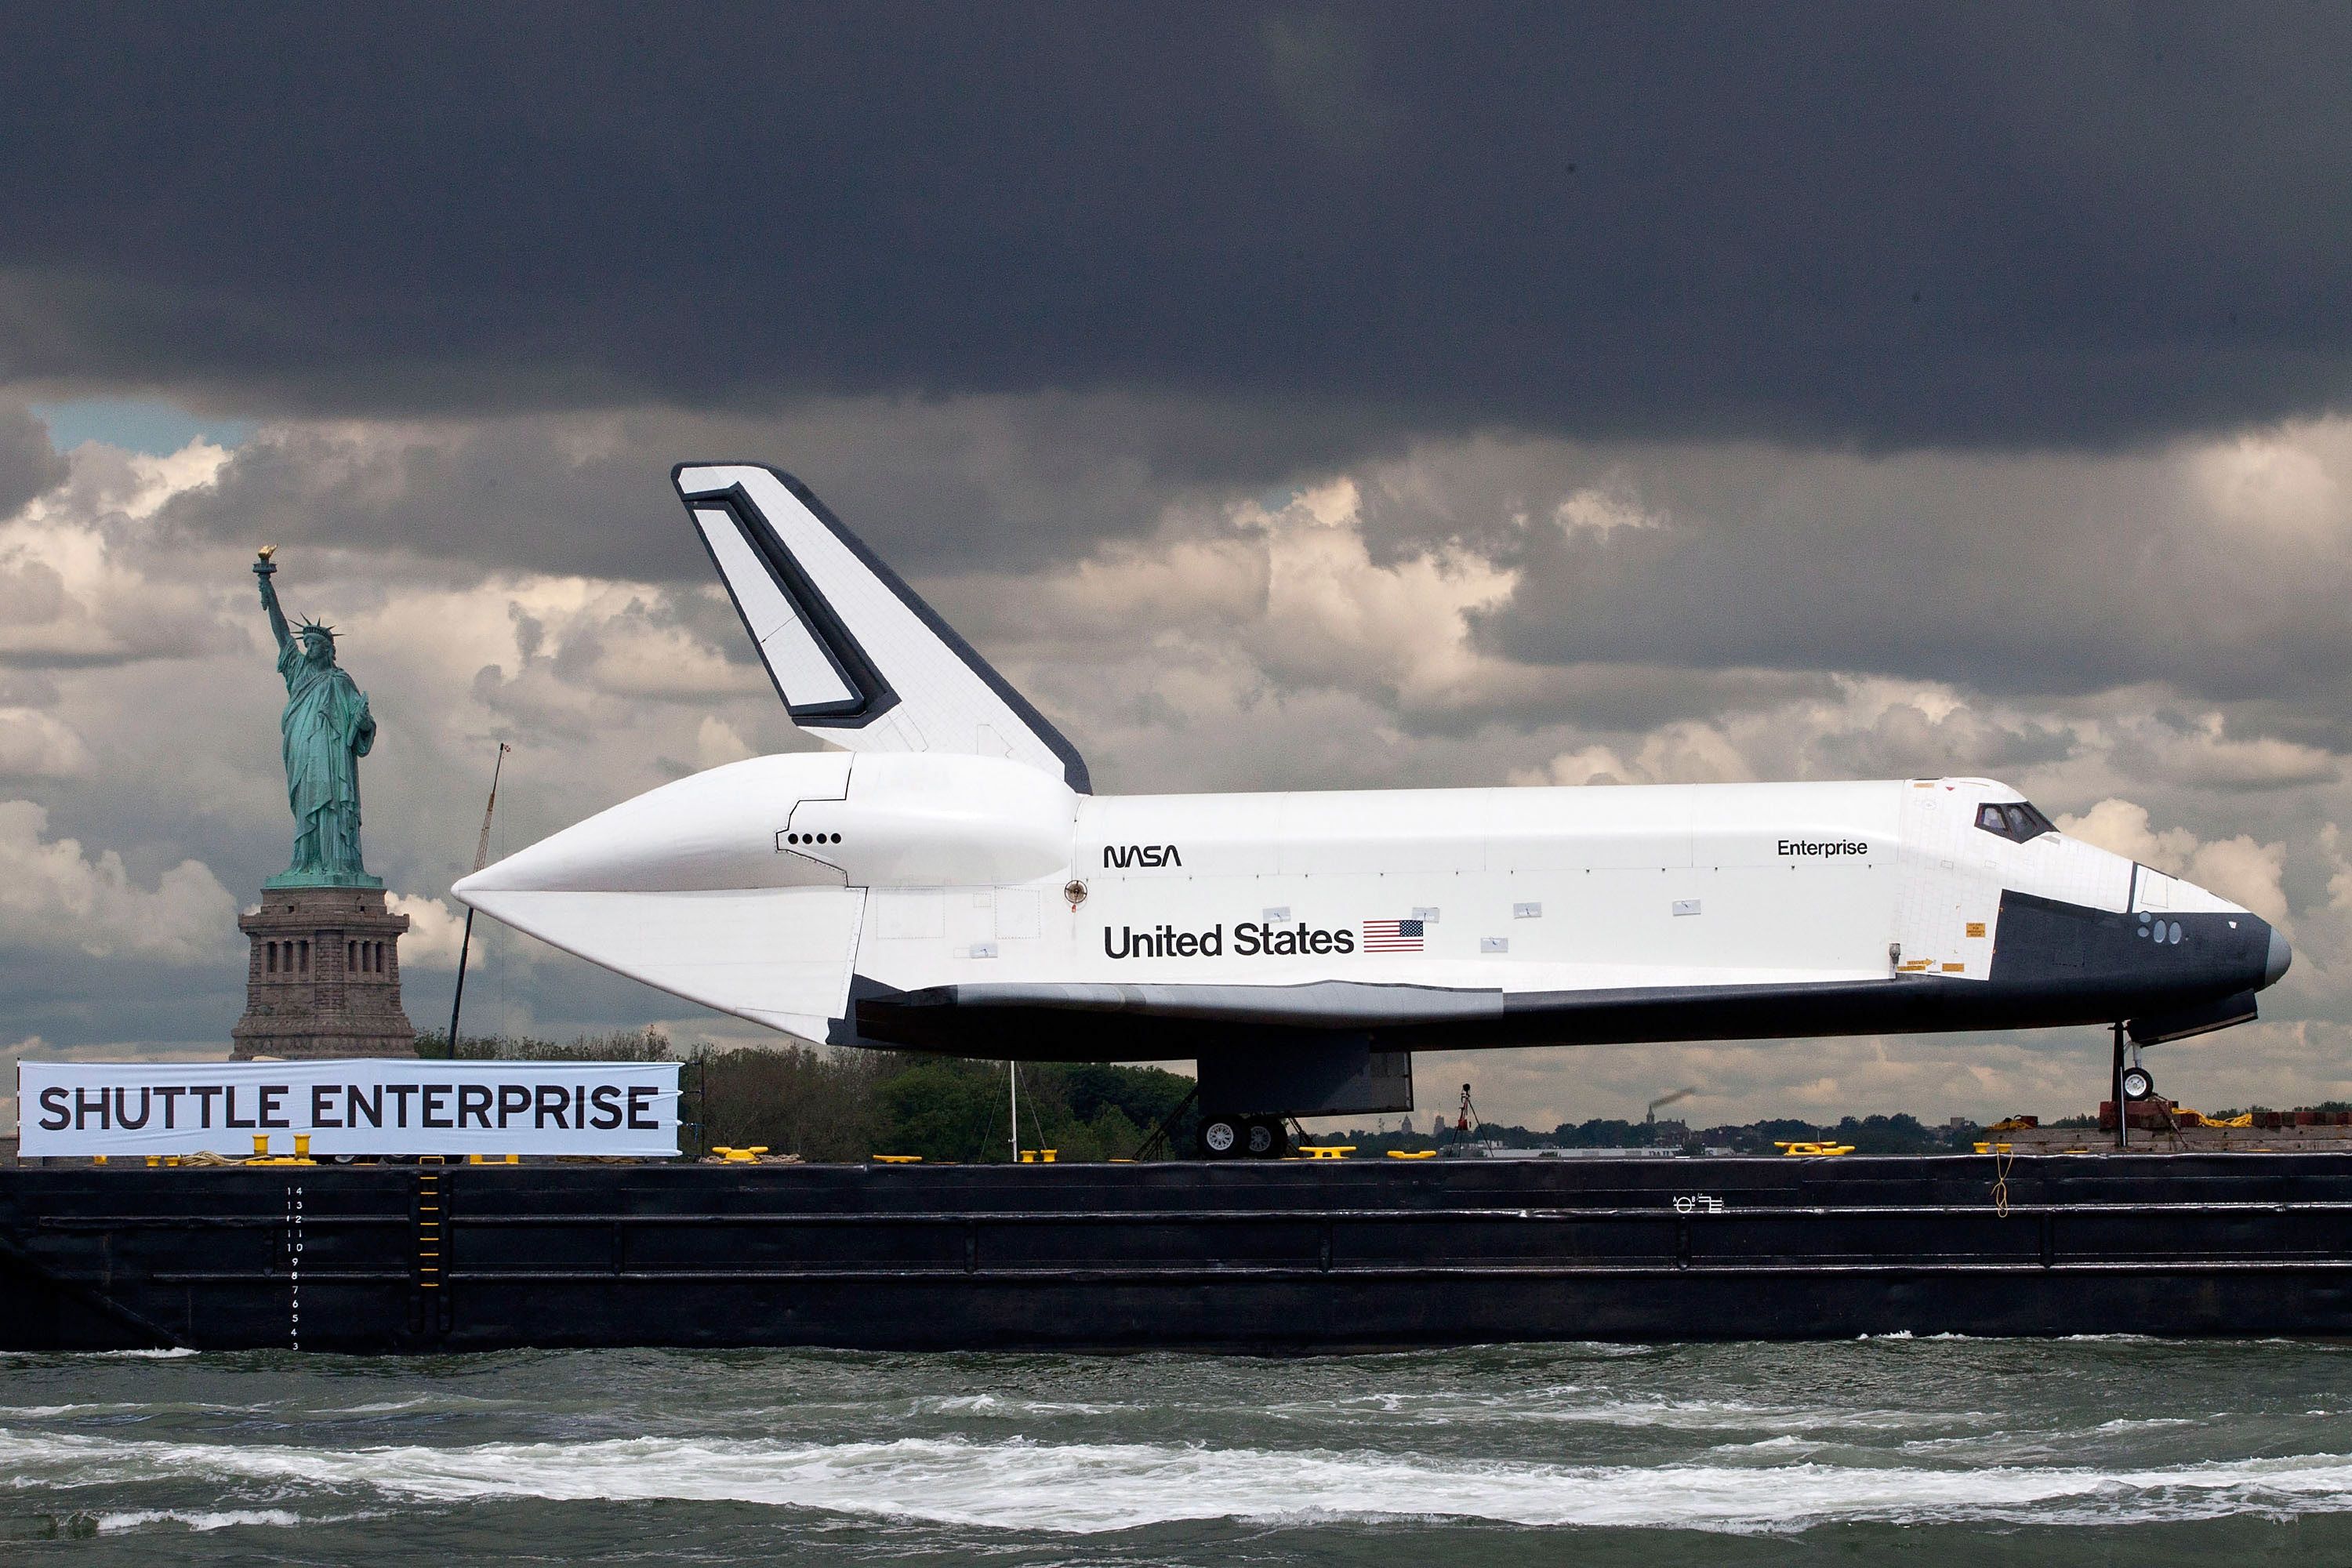 space shuttle enterprise in nyc